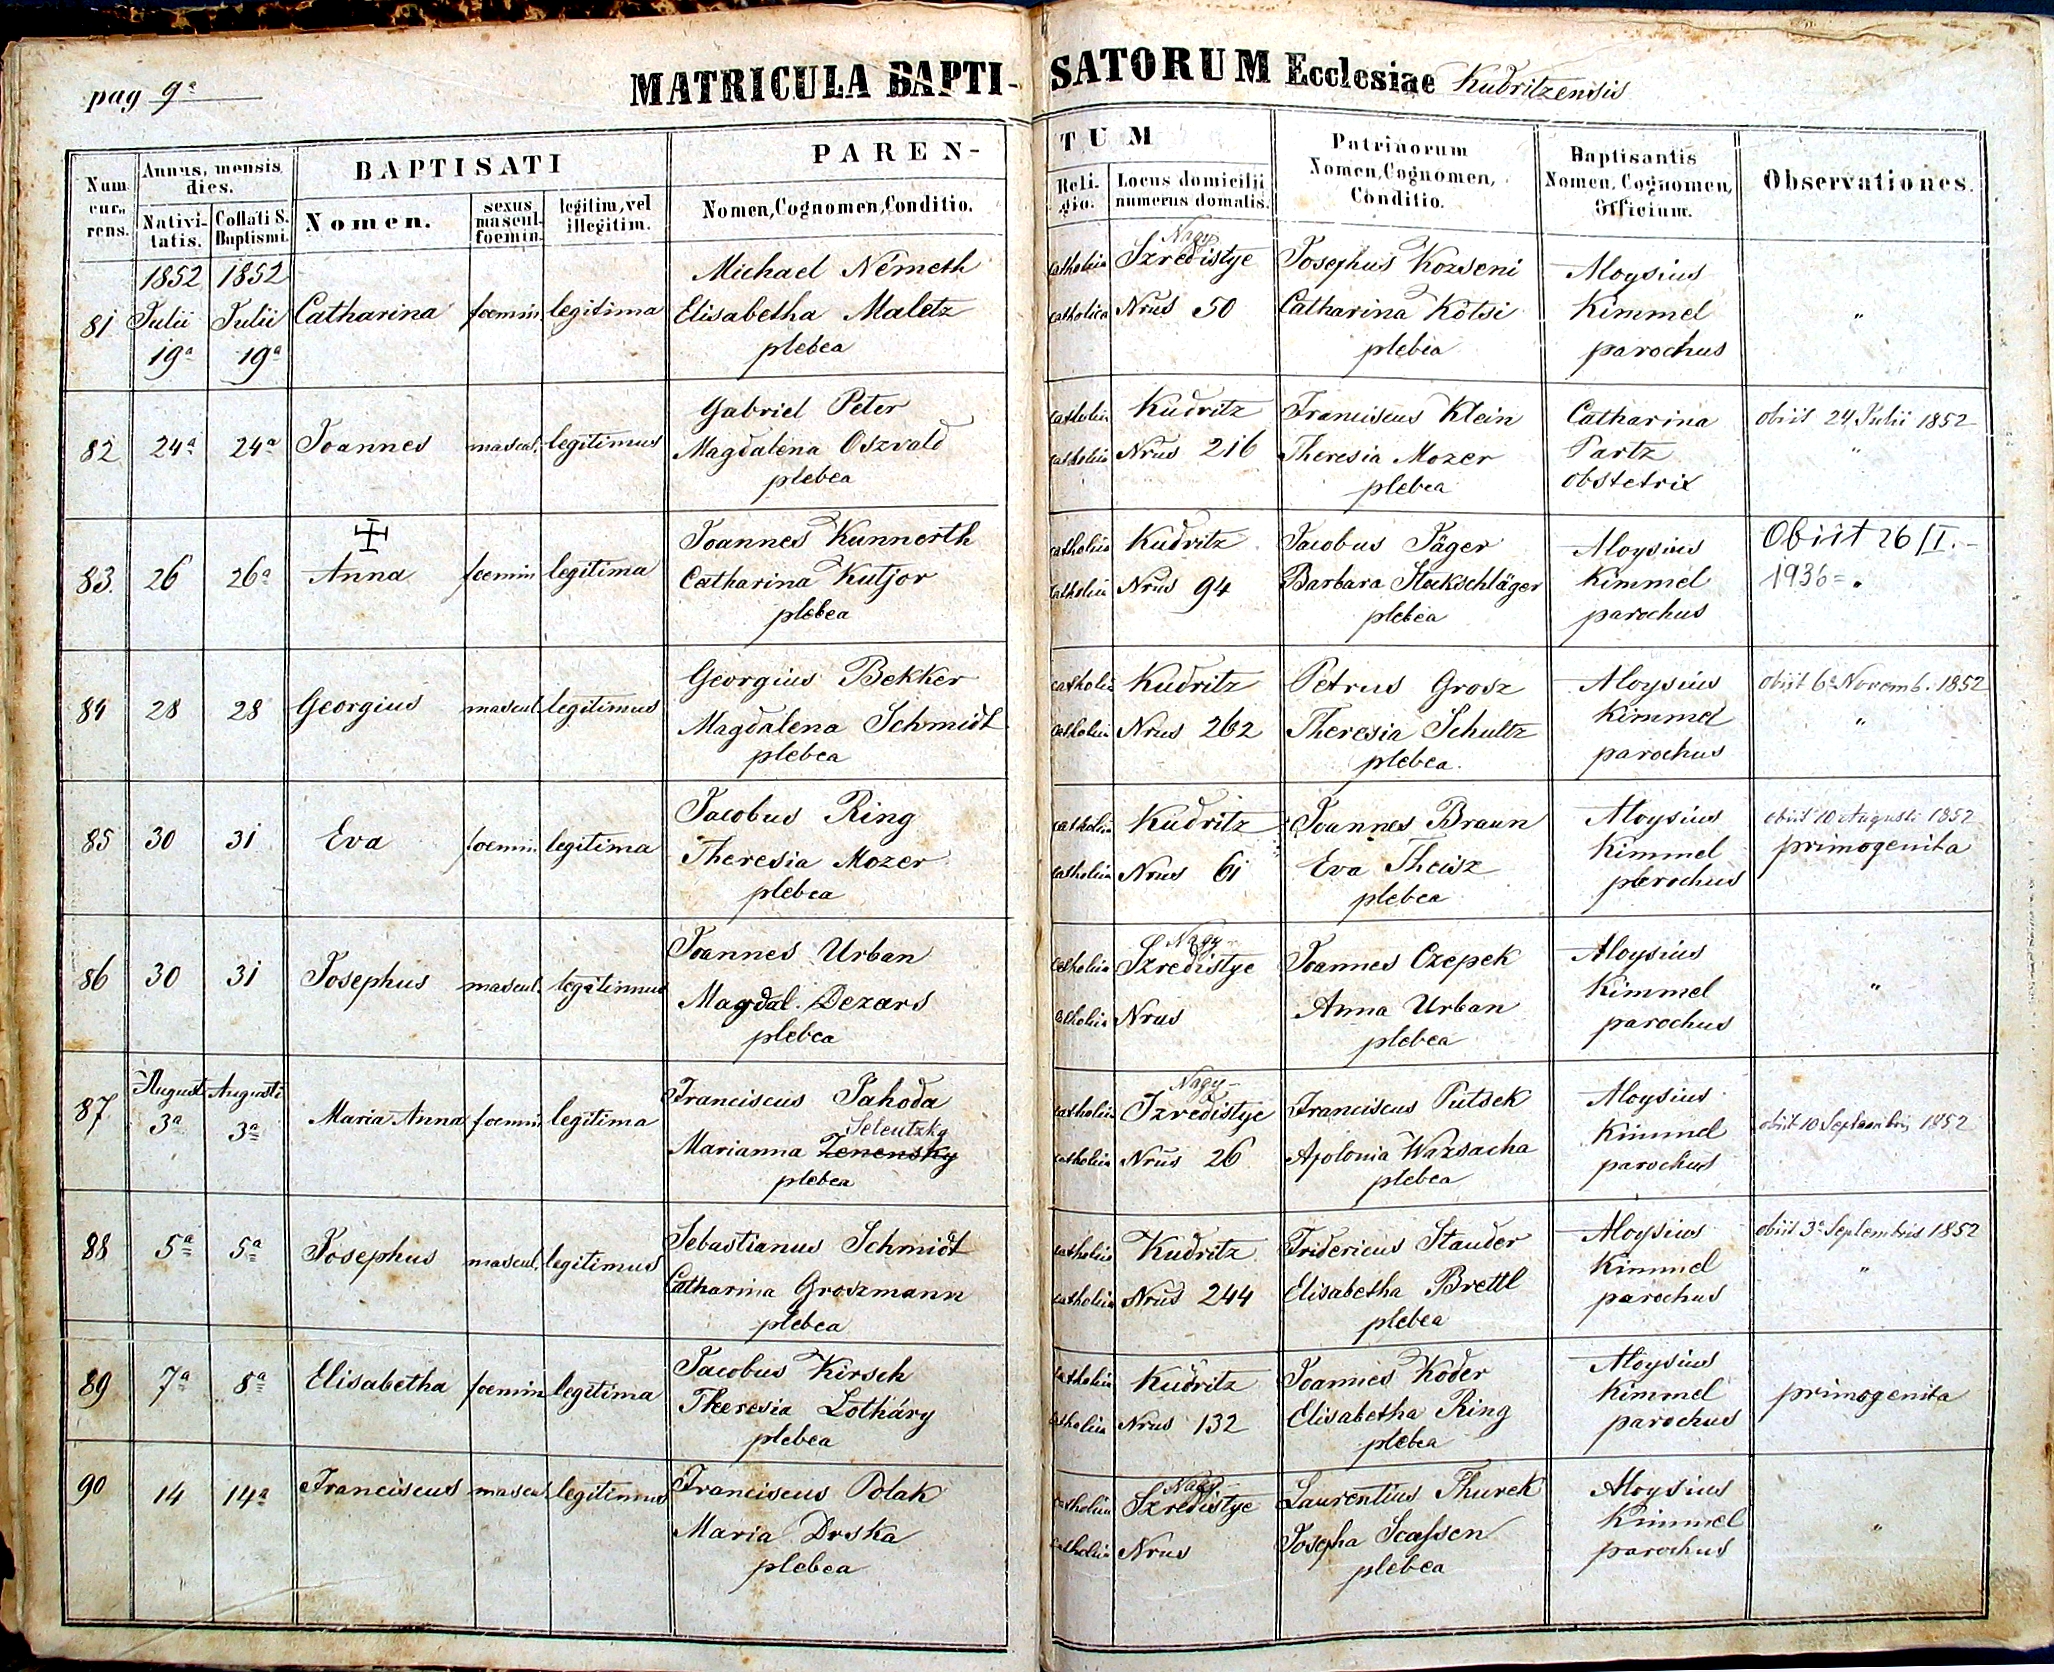 images/church_records/BIRTHS/1852-1870B/009